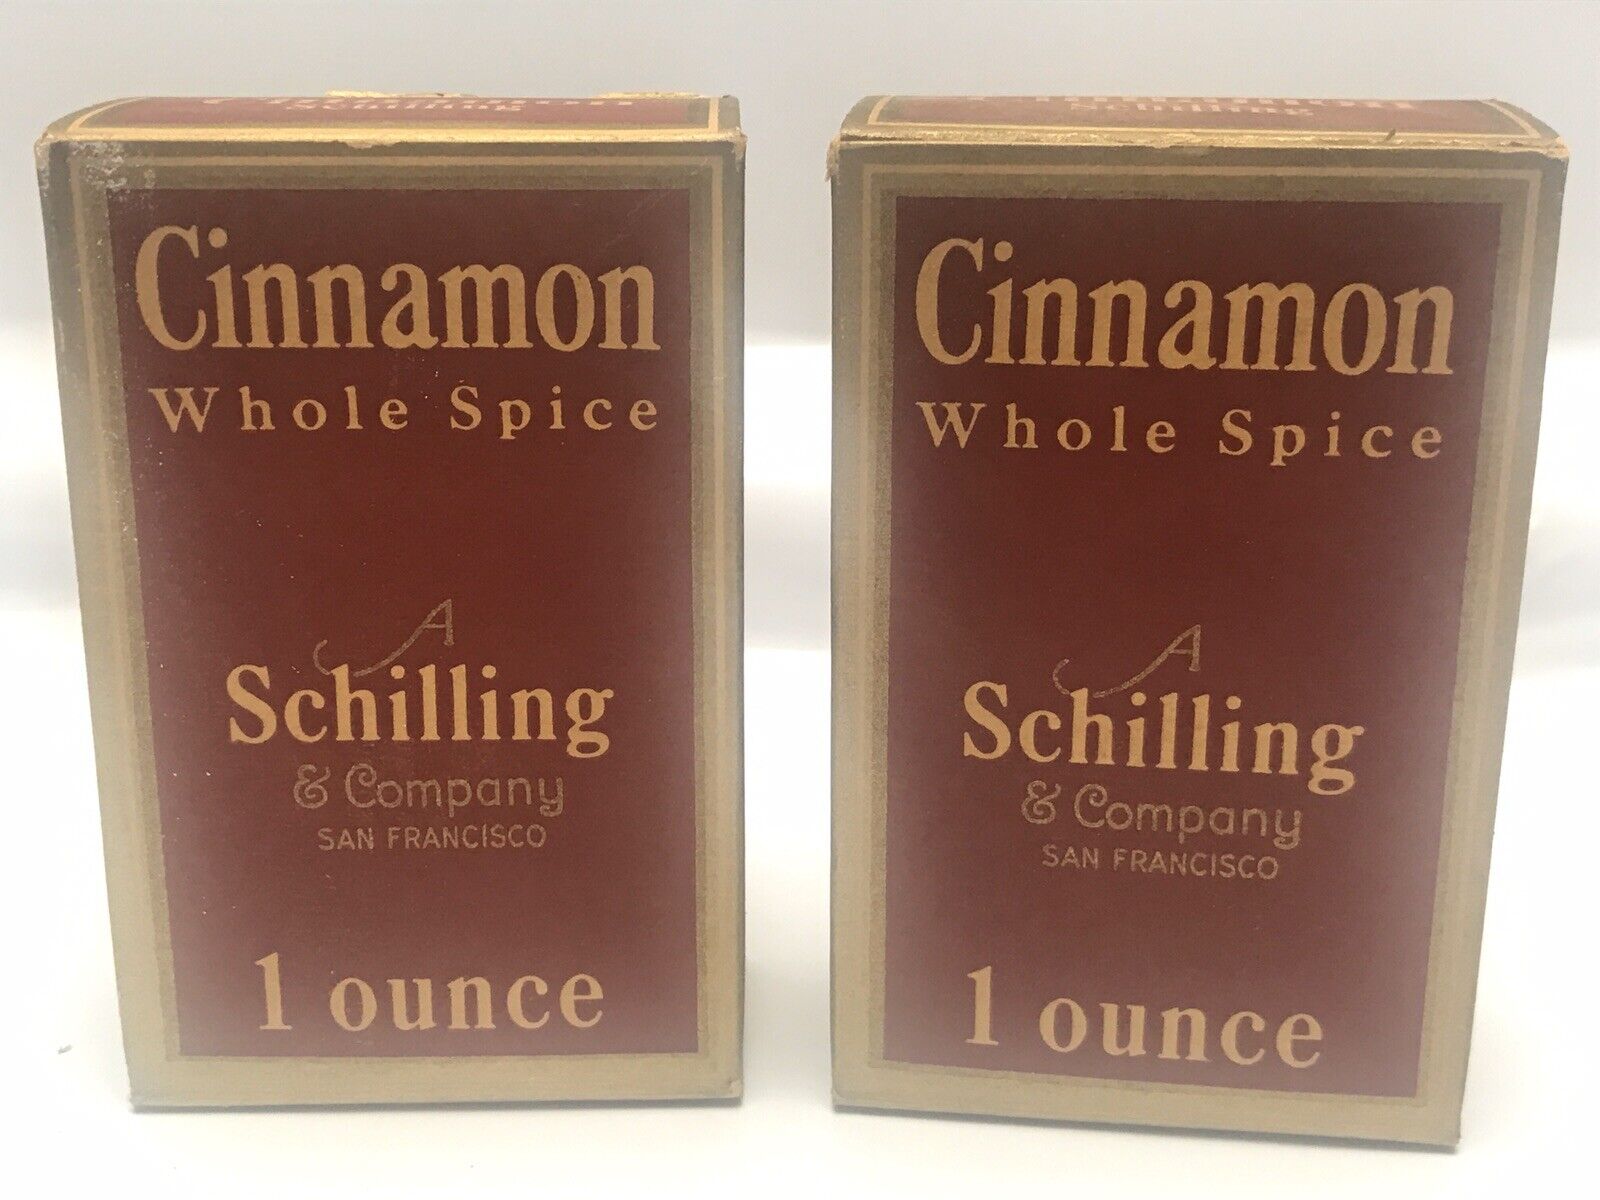 VTG Schilling Cinnamon Spice 1 oz Boxes Full & Very Clean San Francisco